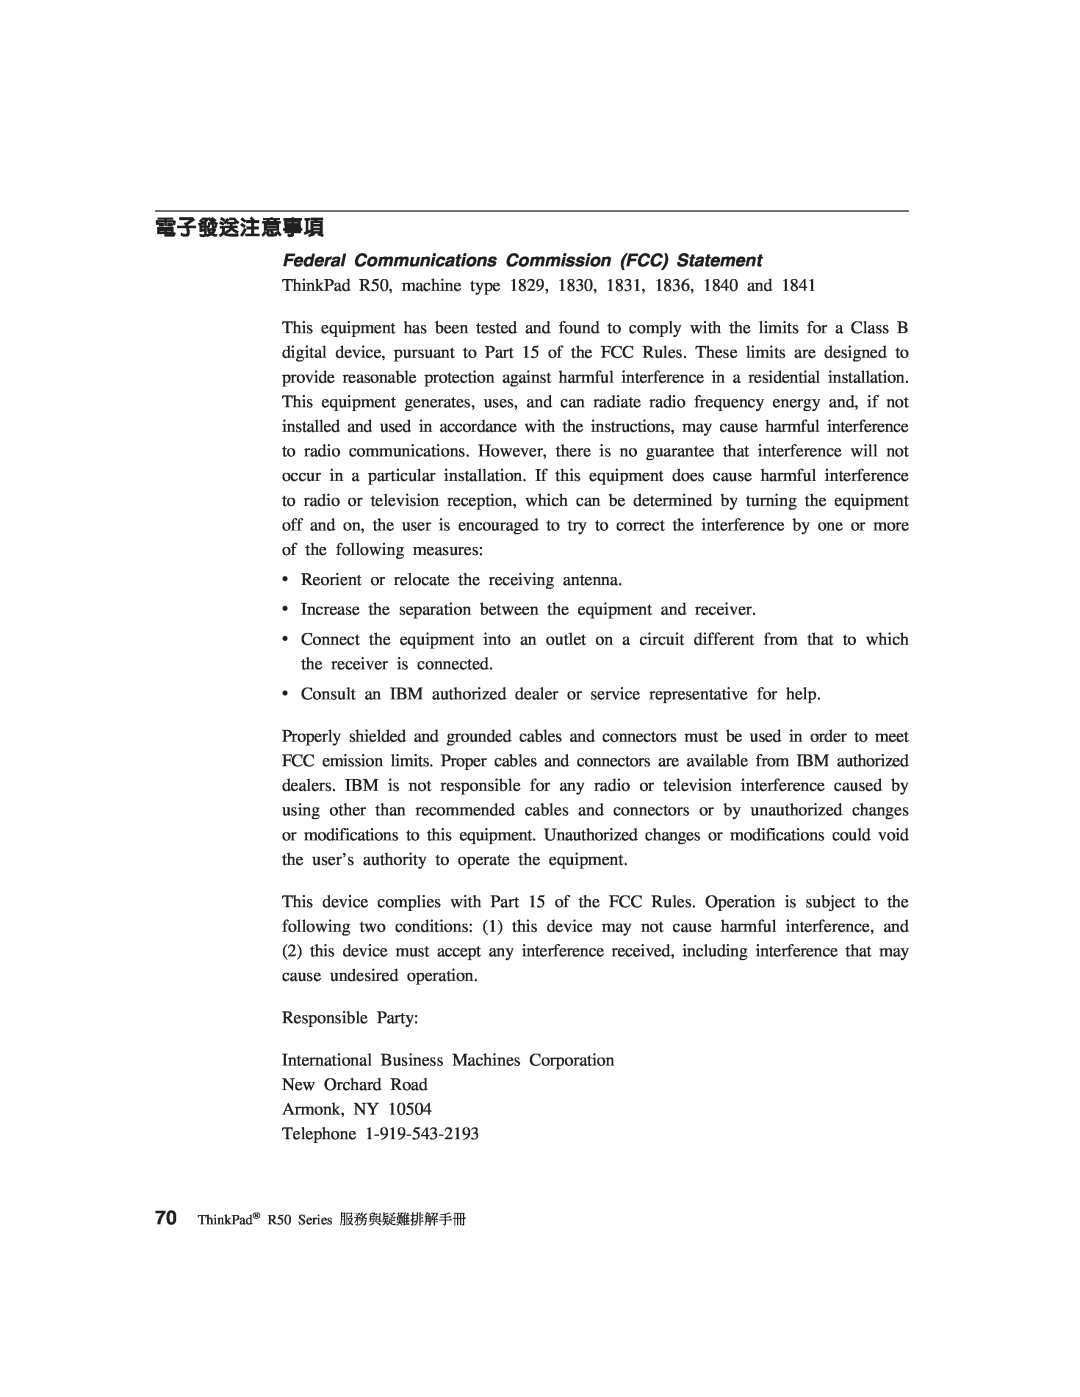 IBM R50 manual qloe N, Federal Communications Commission FCC Statement 